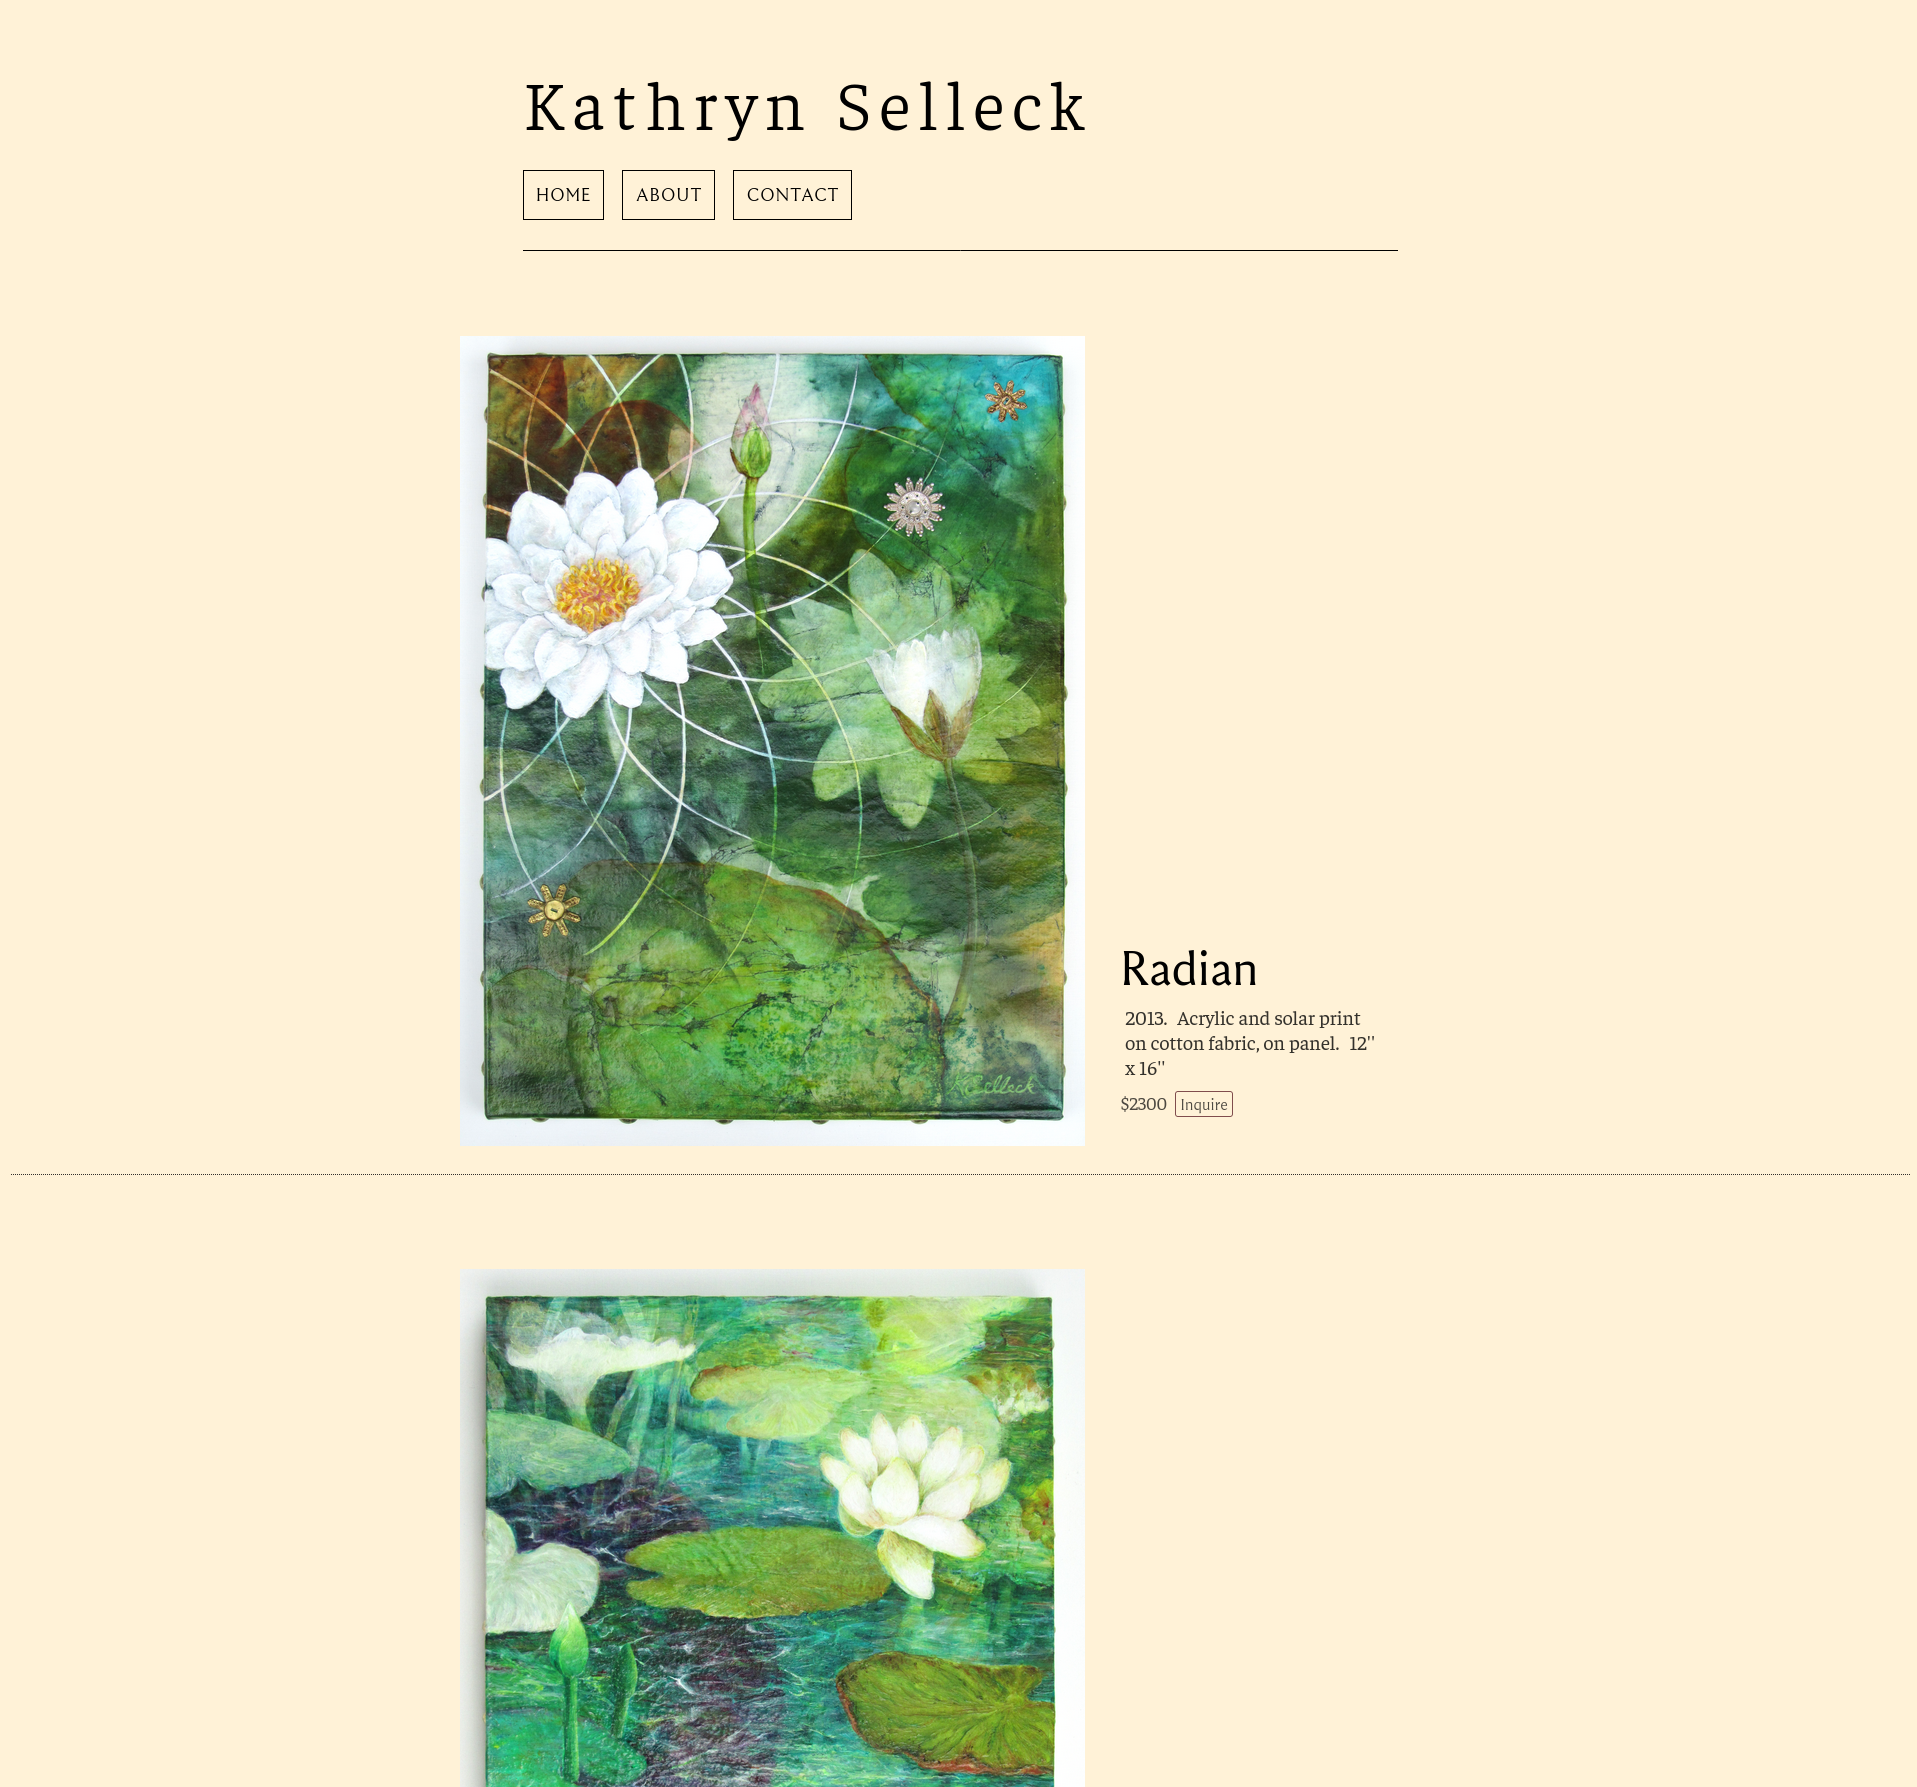 screenshot of kathrynselleck.com homepage